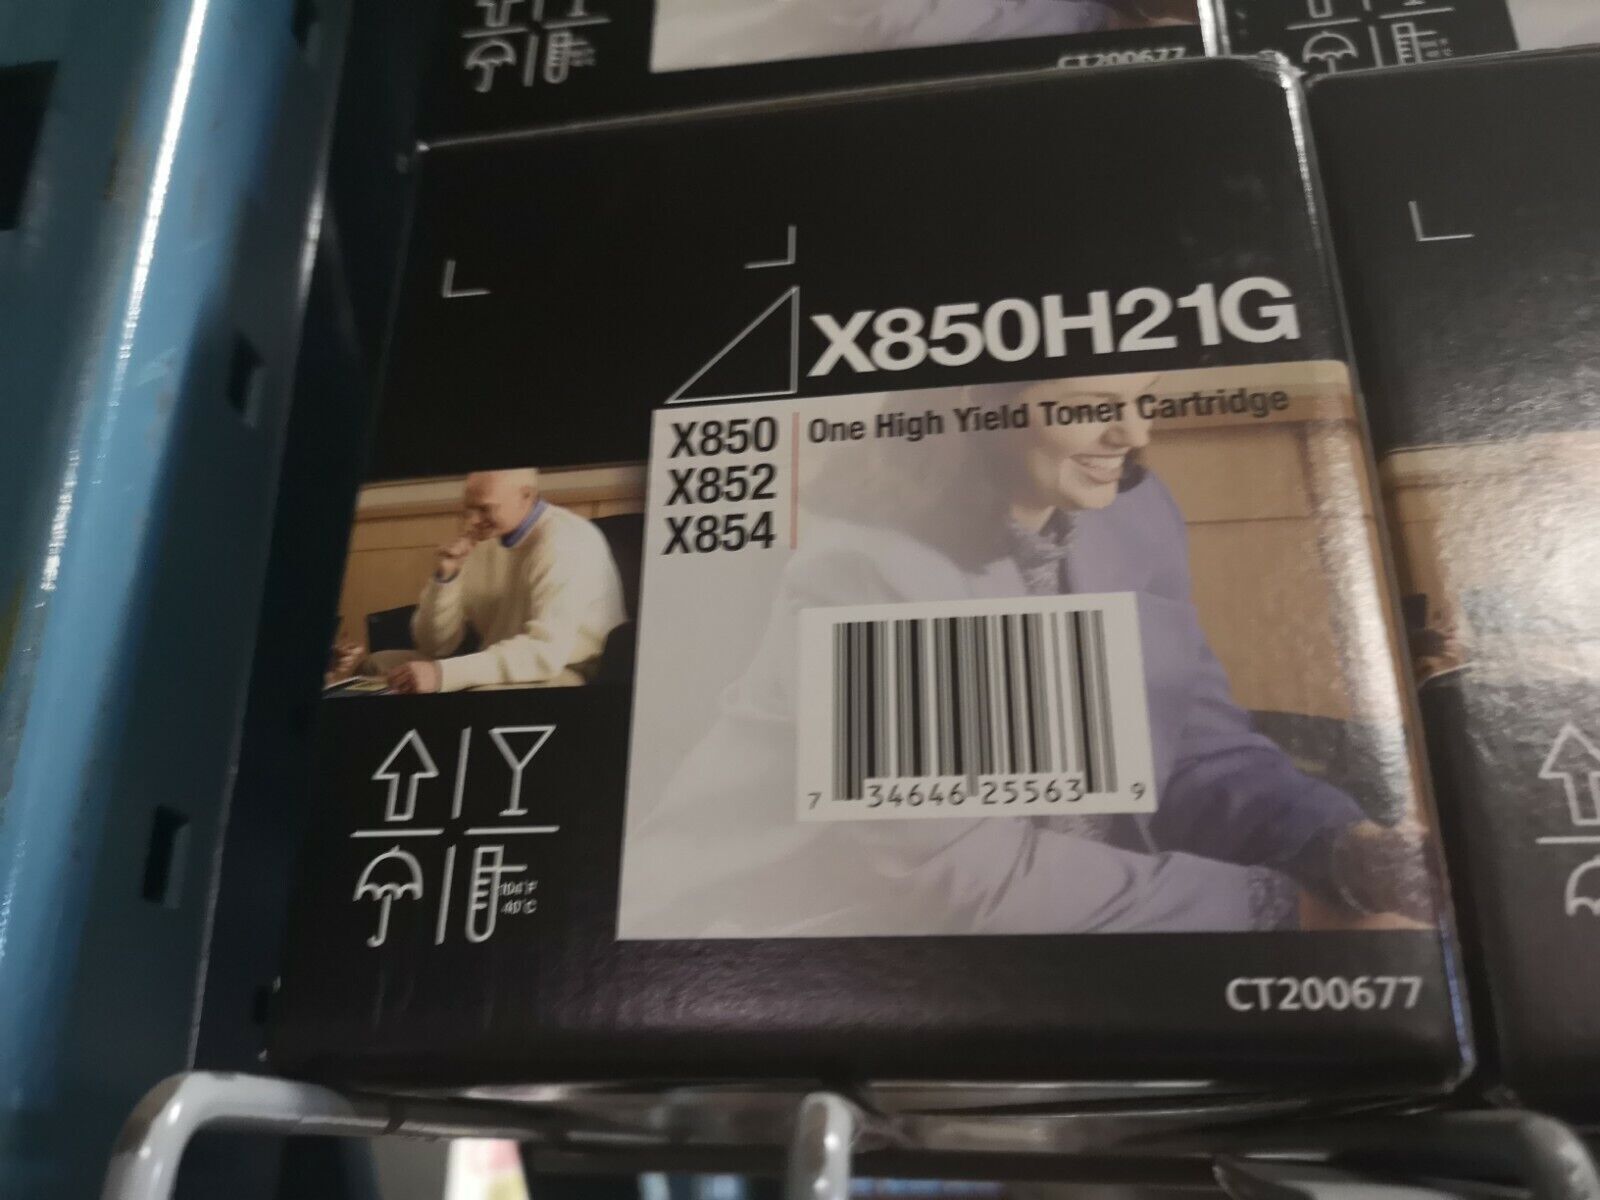 Genuine Lexmark X850H21G Black Toner Cartridge - NEW SEALED